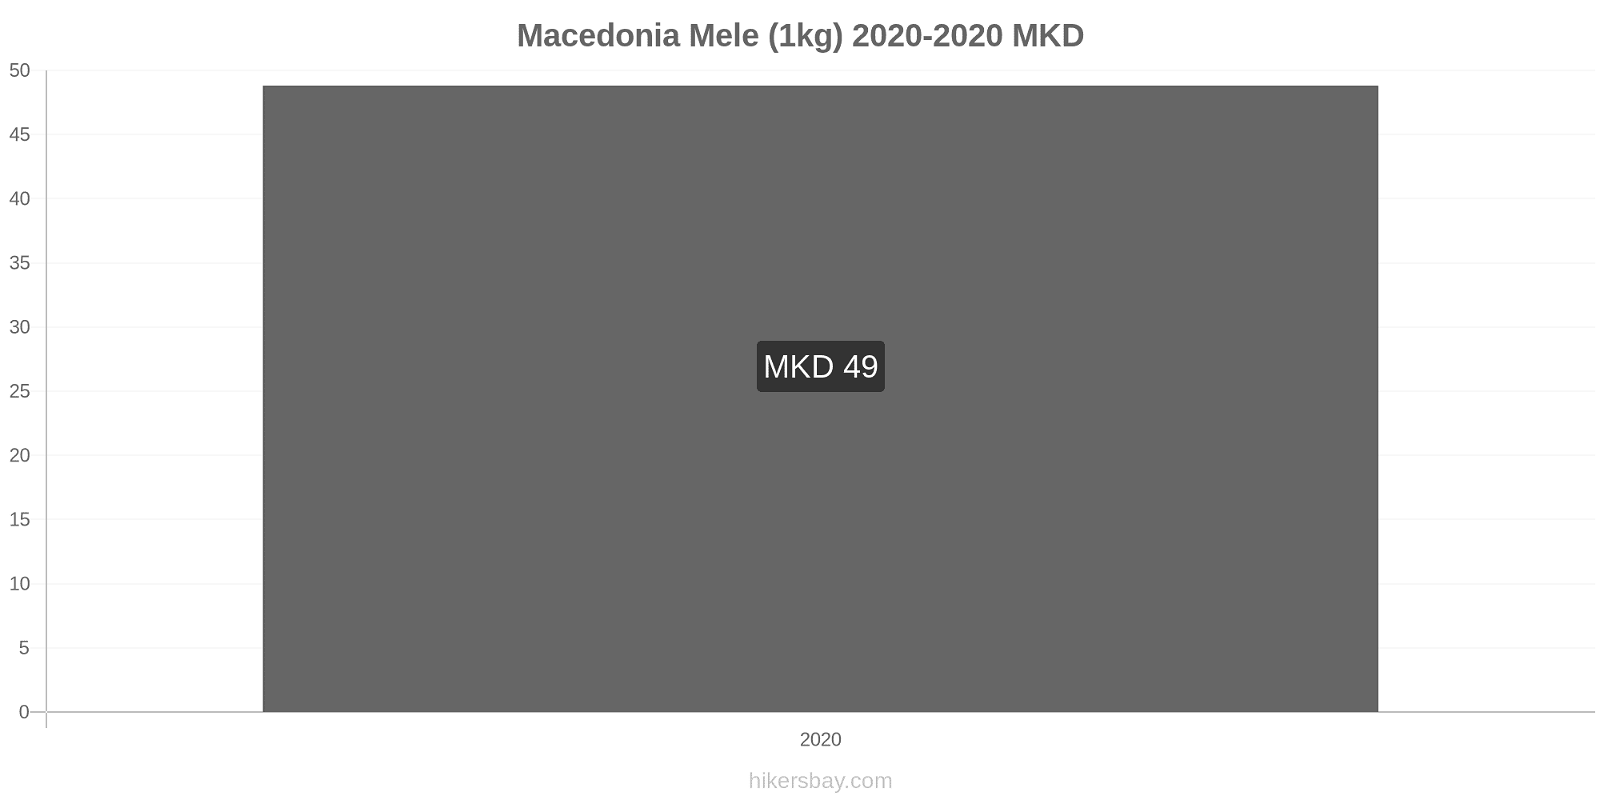 Macedonia variazioni di prezzo Mele (1kg) hikersbay.com